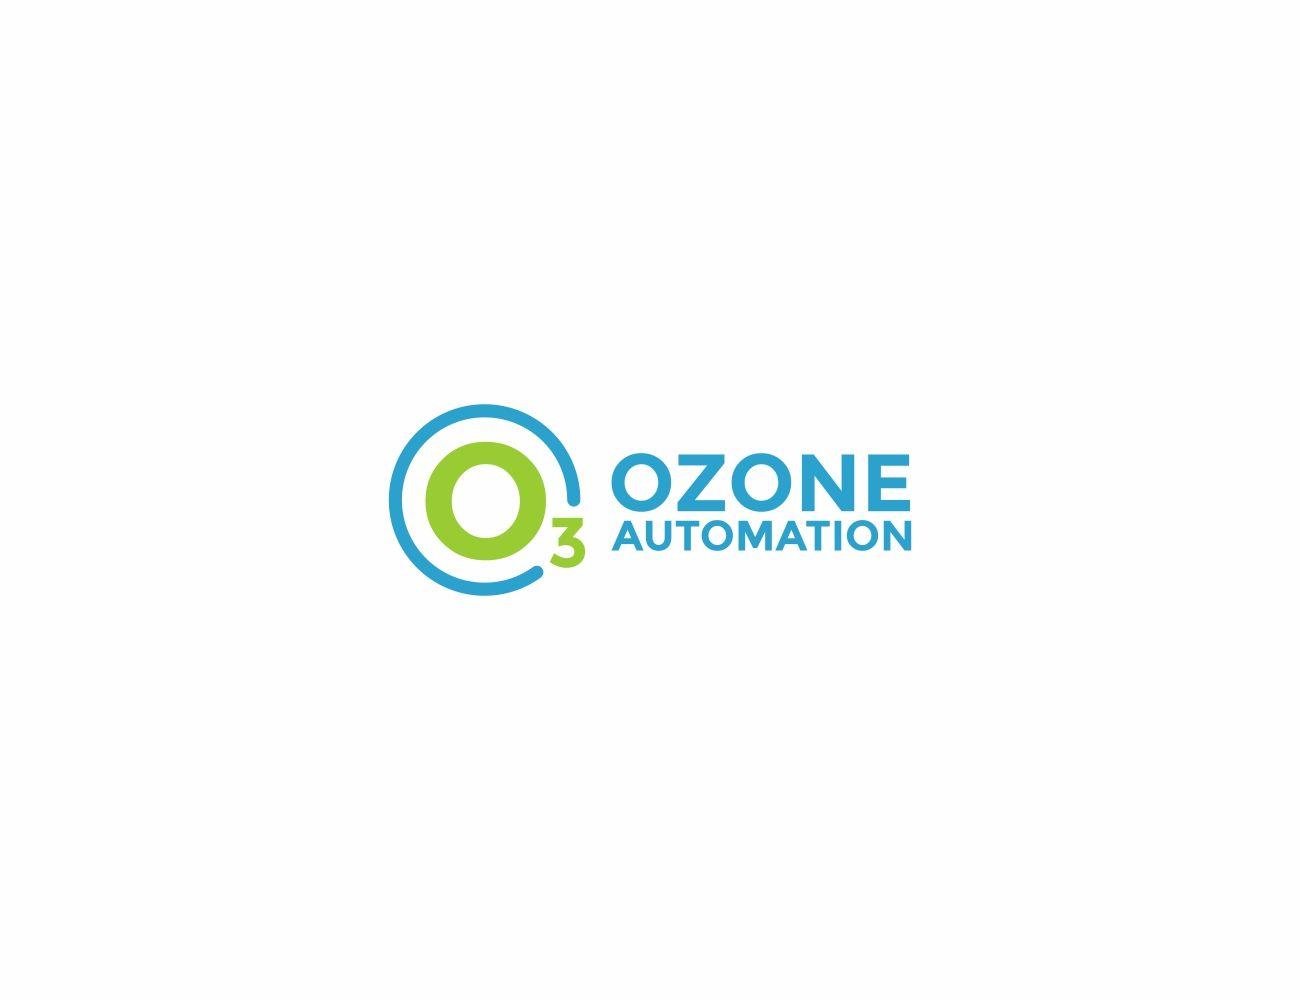 Ozone Logo - Modern, Professional, Industrial Logo Design for Ozone Automation